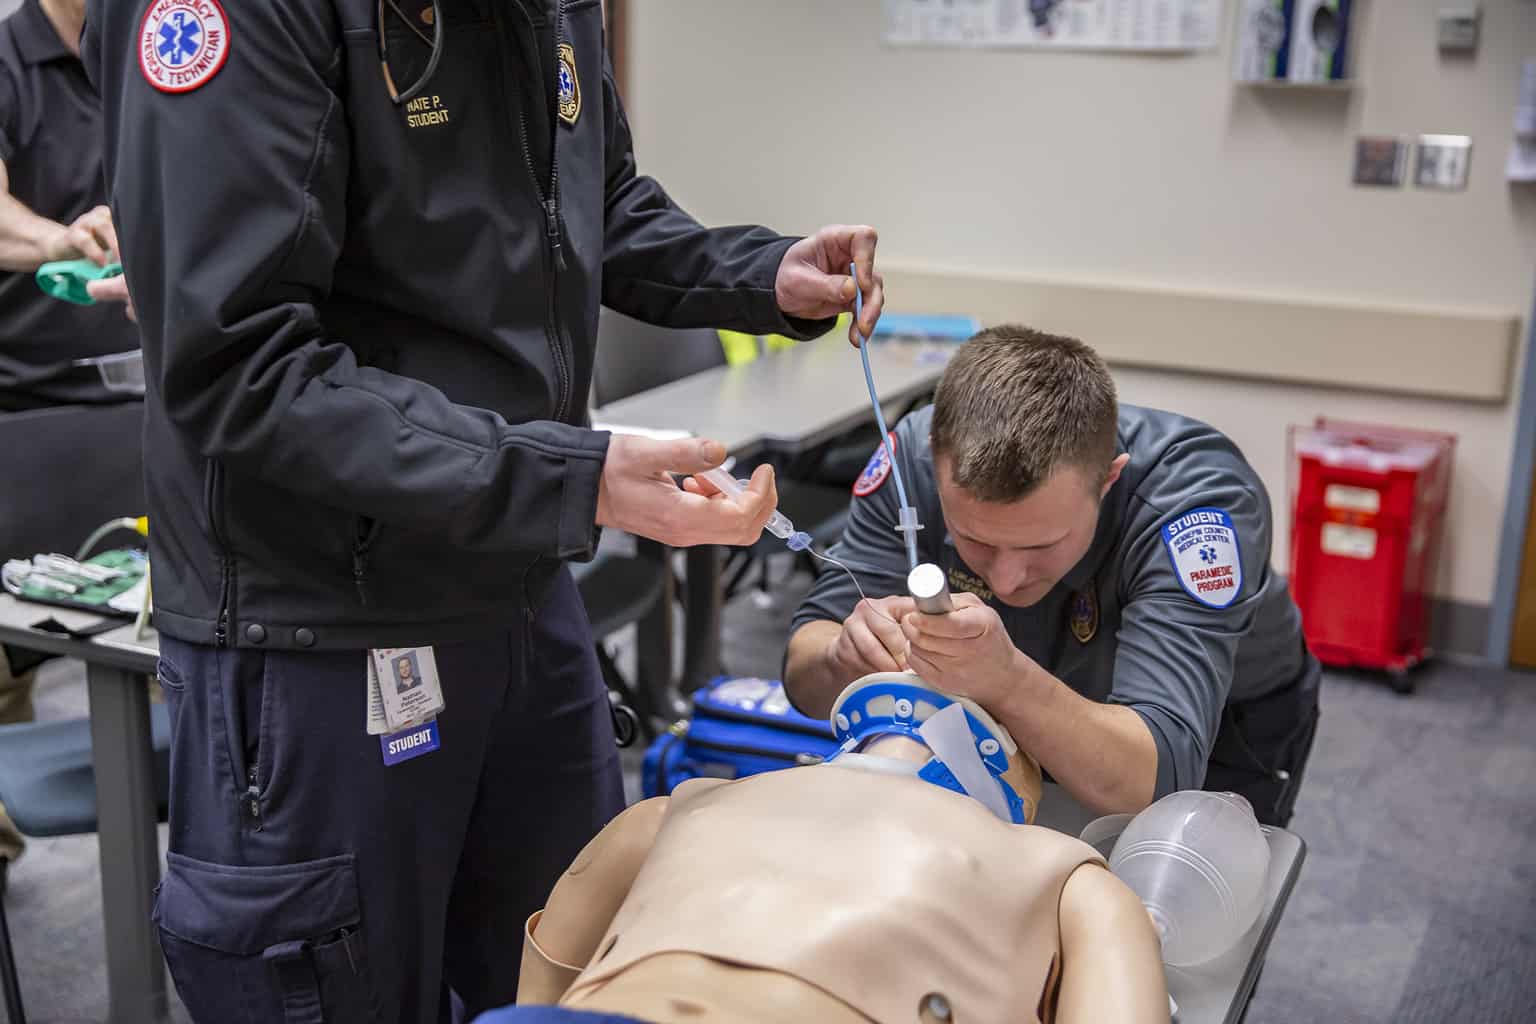 ems student training with dummy resuscitation